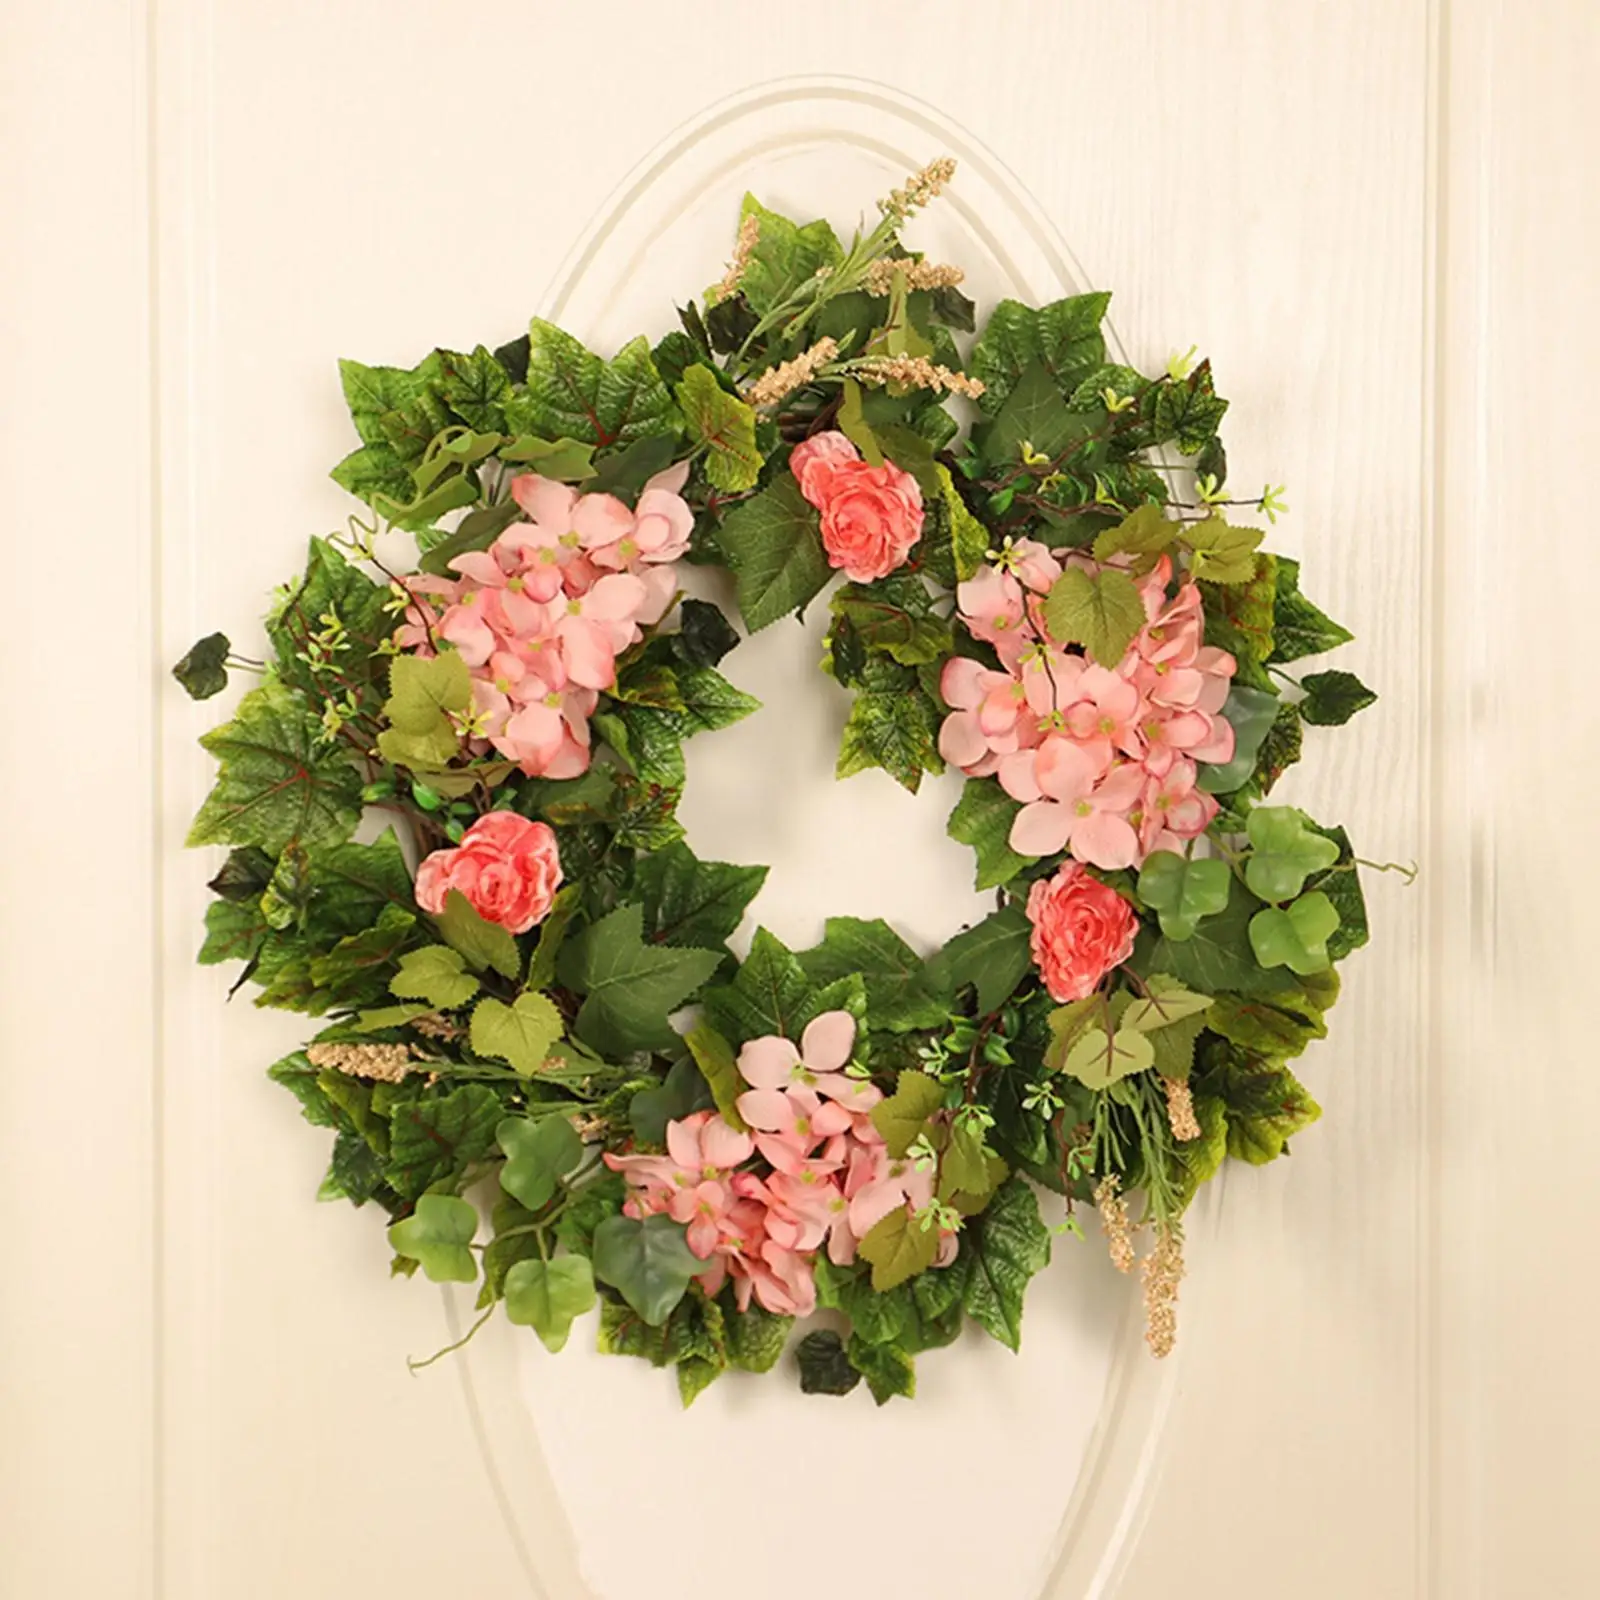 Pink Hydrangea Wreath Front Door Wreath Ornament Party Supplies Spring Wreath for Outside Garden Spring Festival Wedding Porch